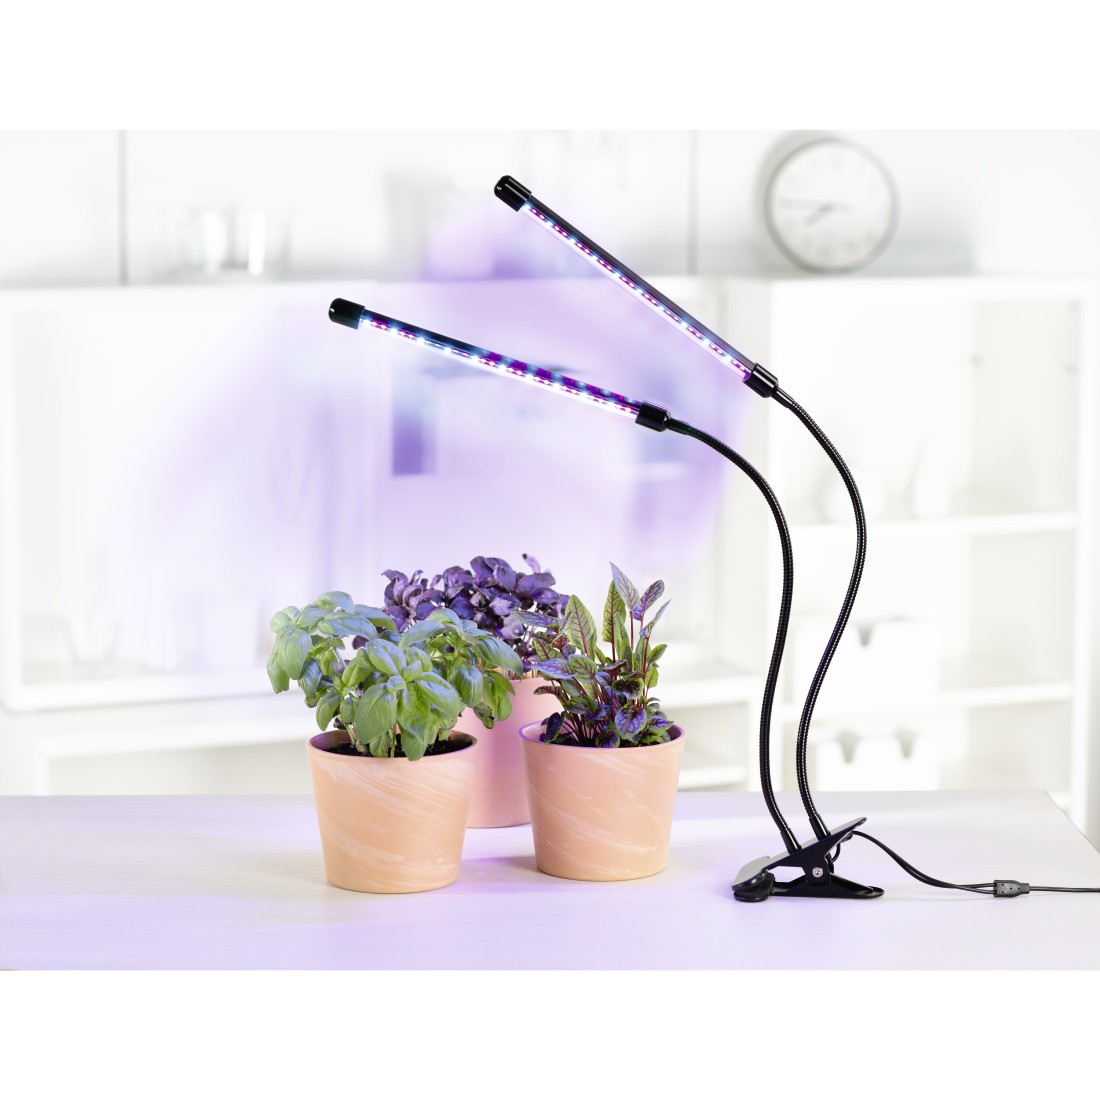 awx4 Druckfähige Anwendung 4 - Xavax, LED-Pflanzenleuchte Stick